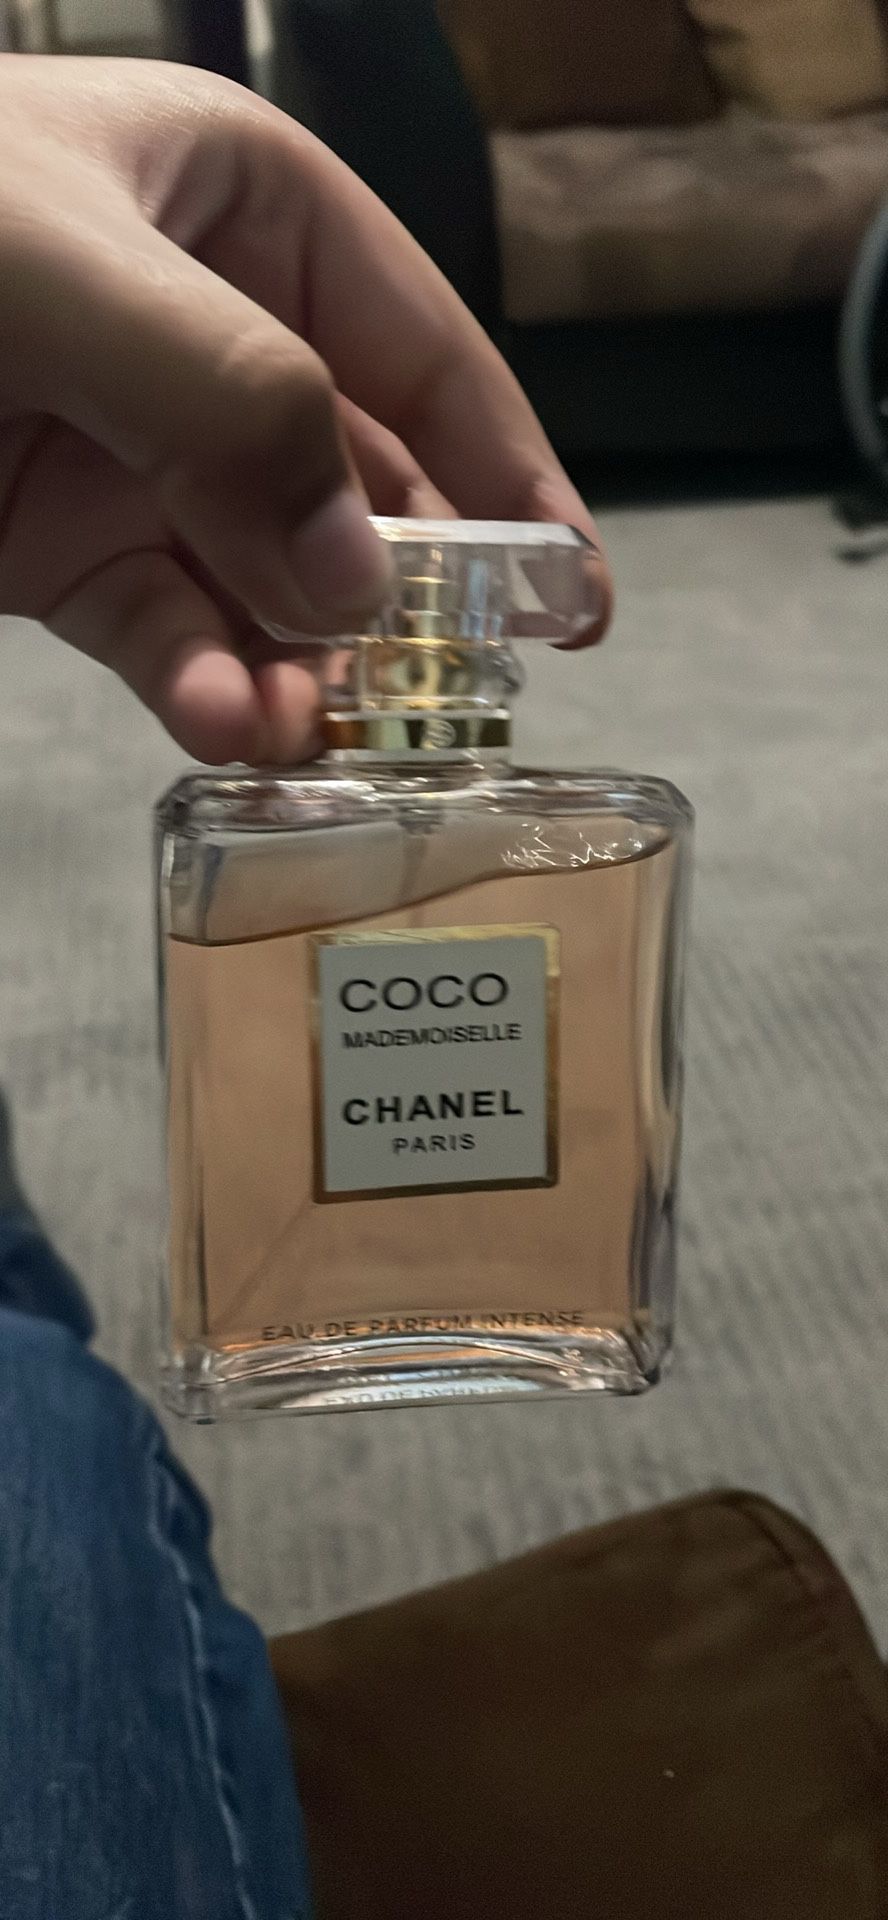 COCO CHANEL MADEMOISELLE Intense 3.4 fl. oz. 100 ml Eau De Parfum